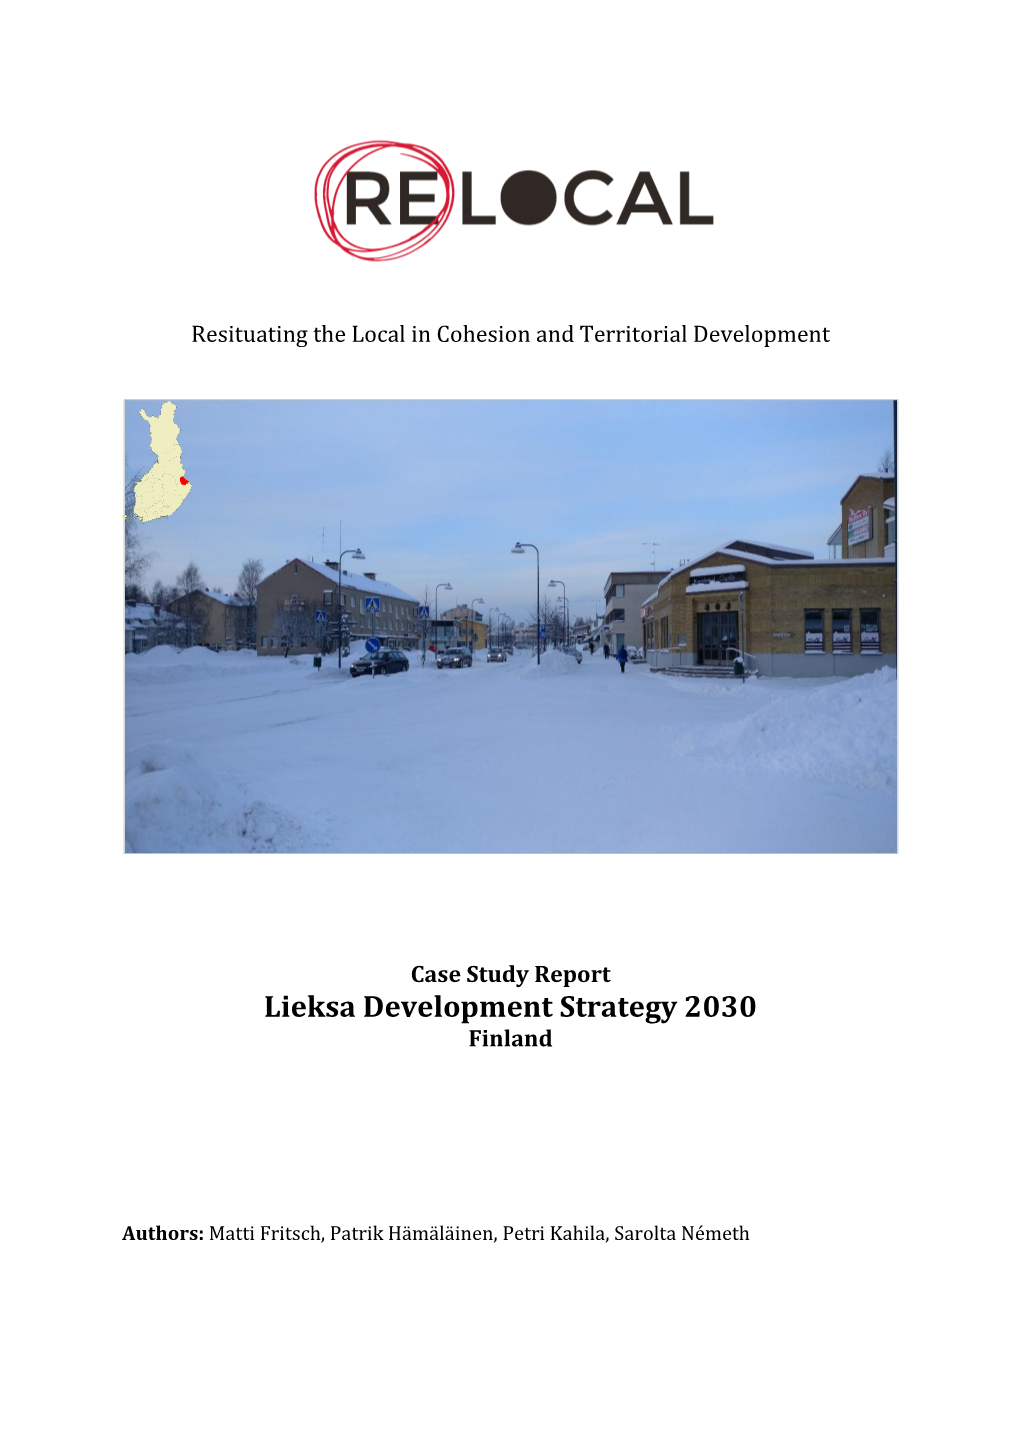 Lieksa Development Strategy 2030 Finland